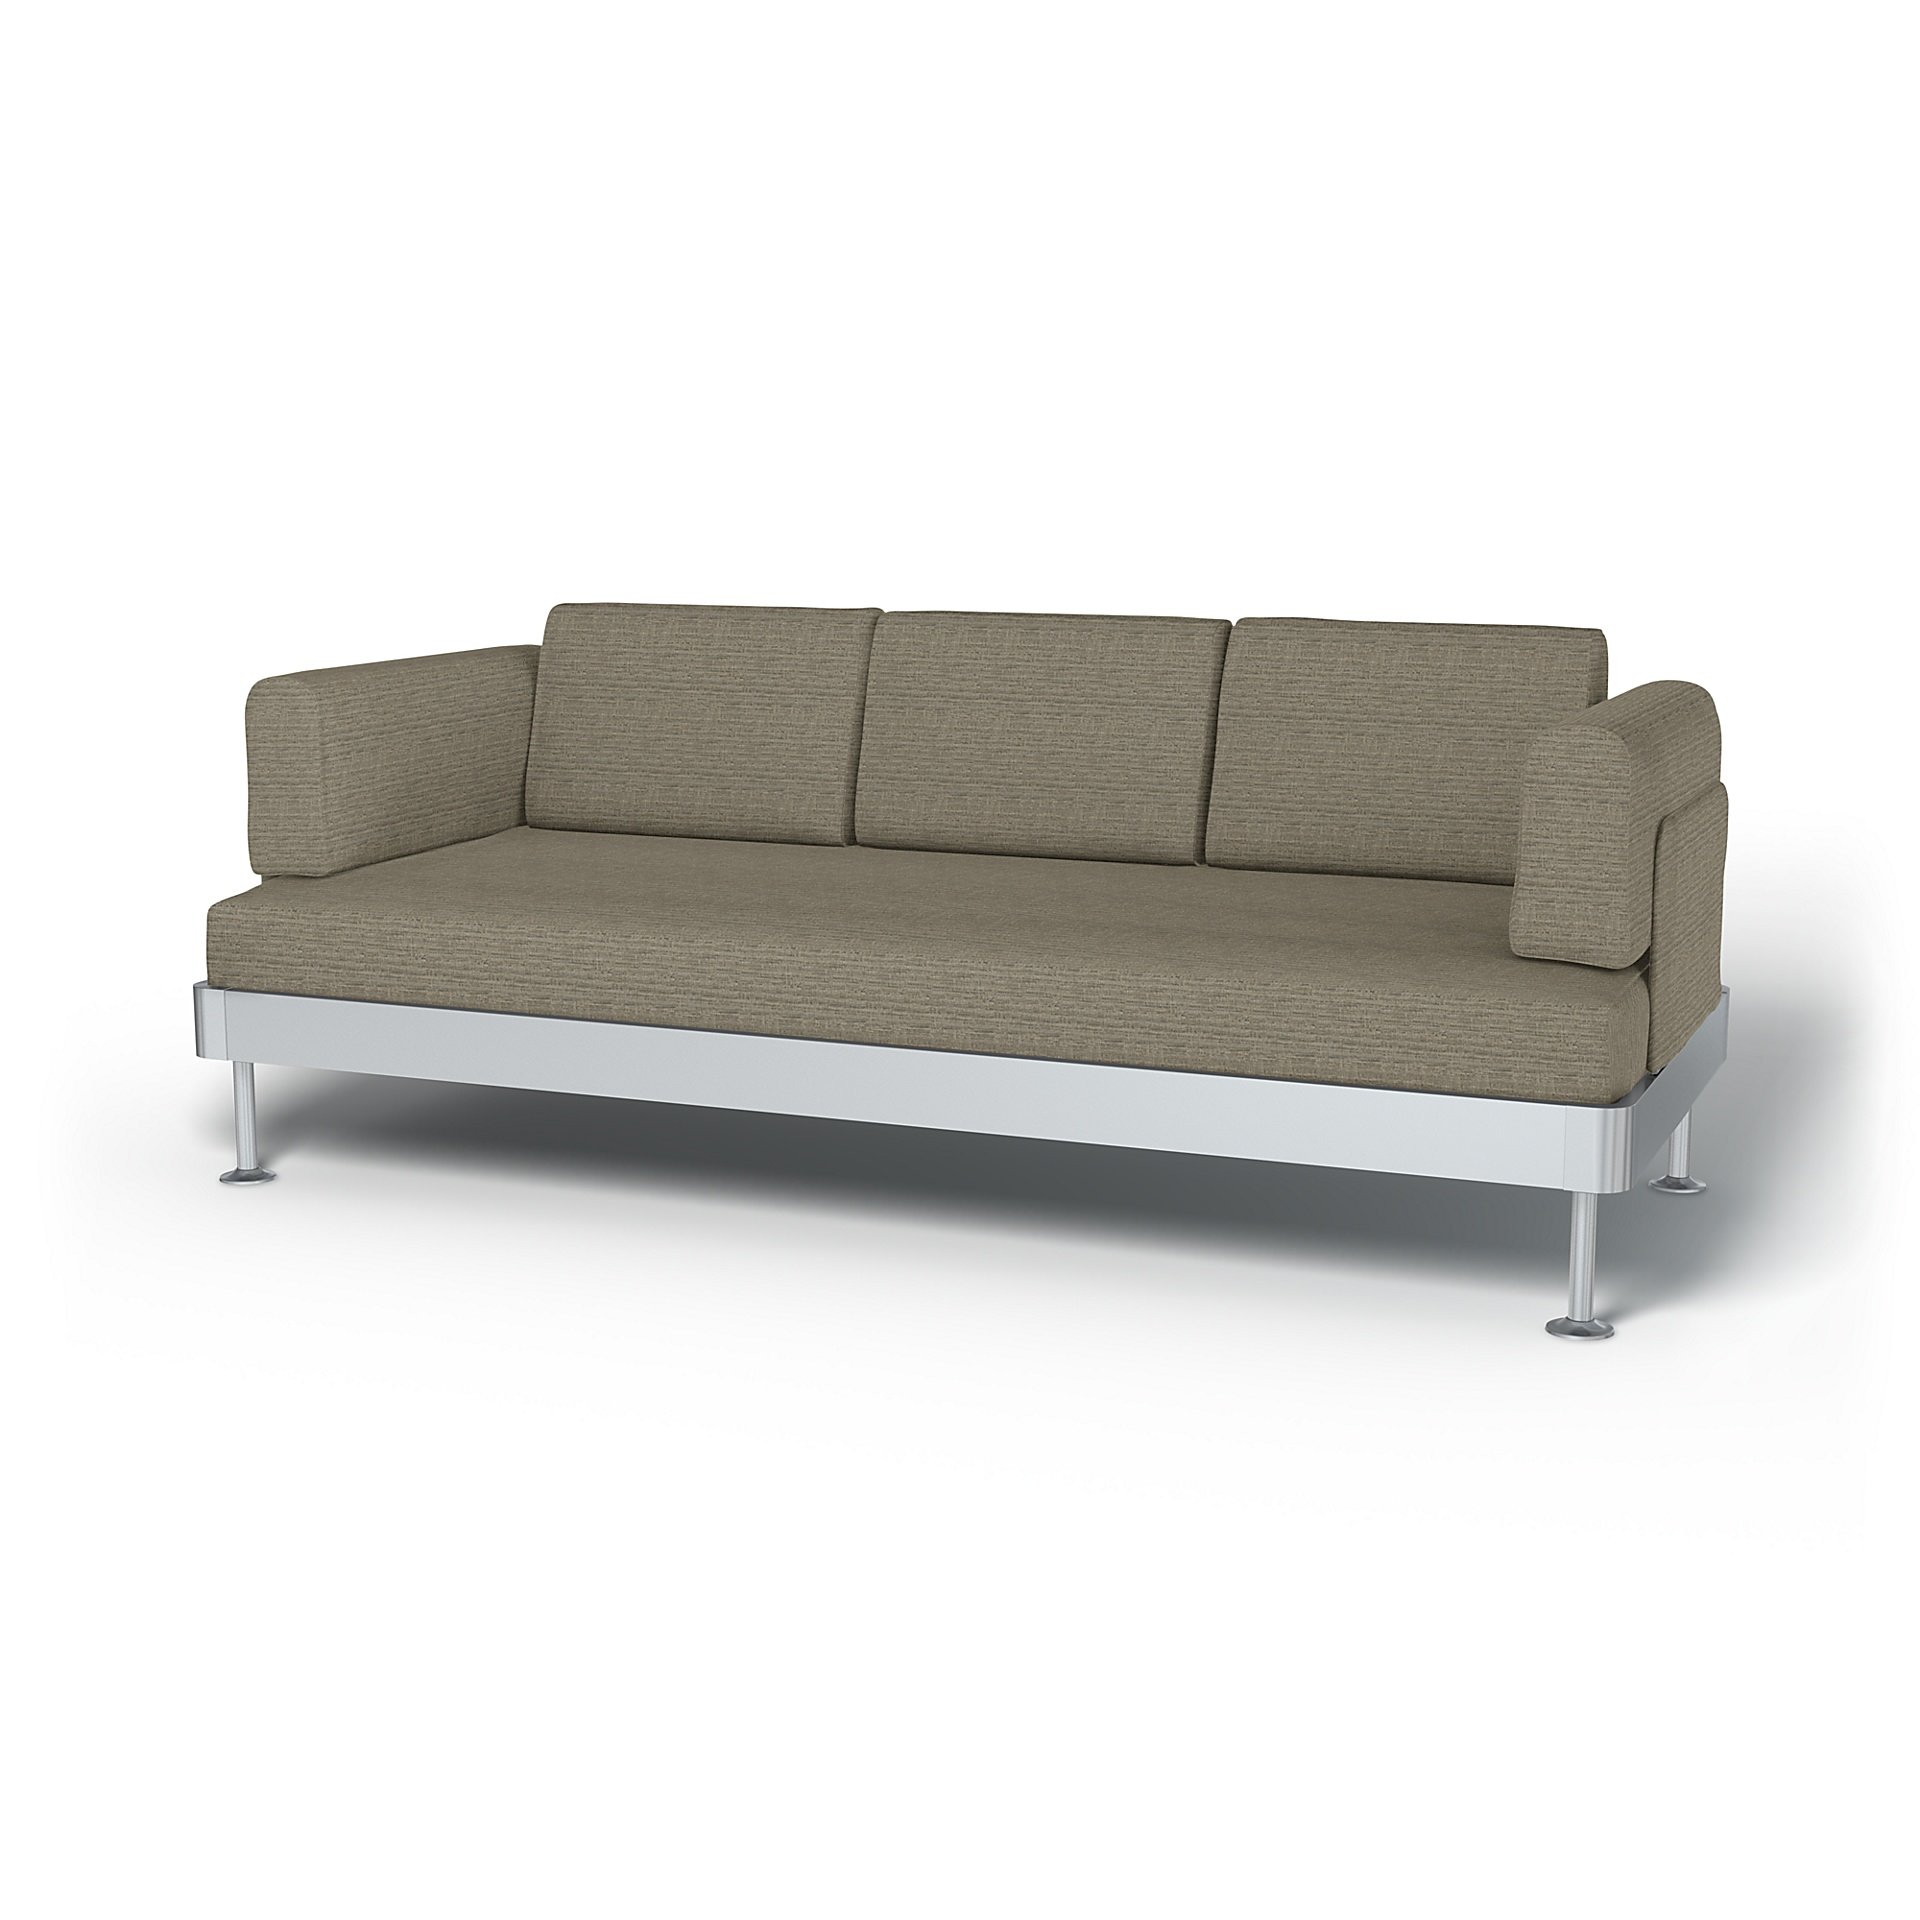 IKEA - Delaktig 3 Seater Sofa Cover, Mole Brown, Boucle & Texture - Bemz